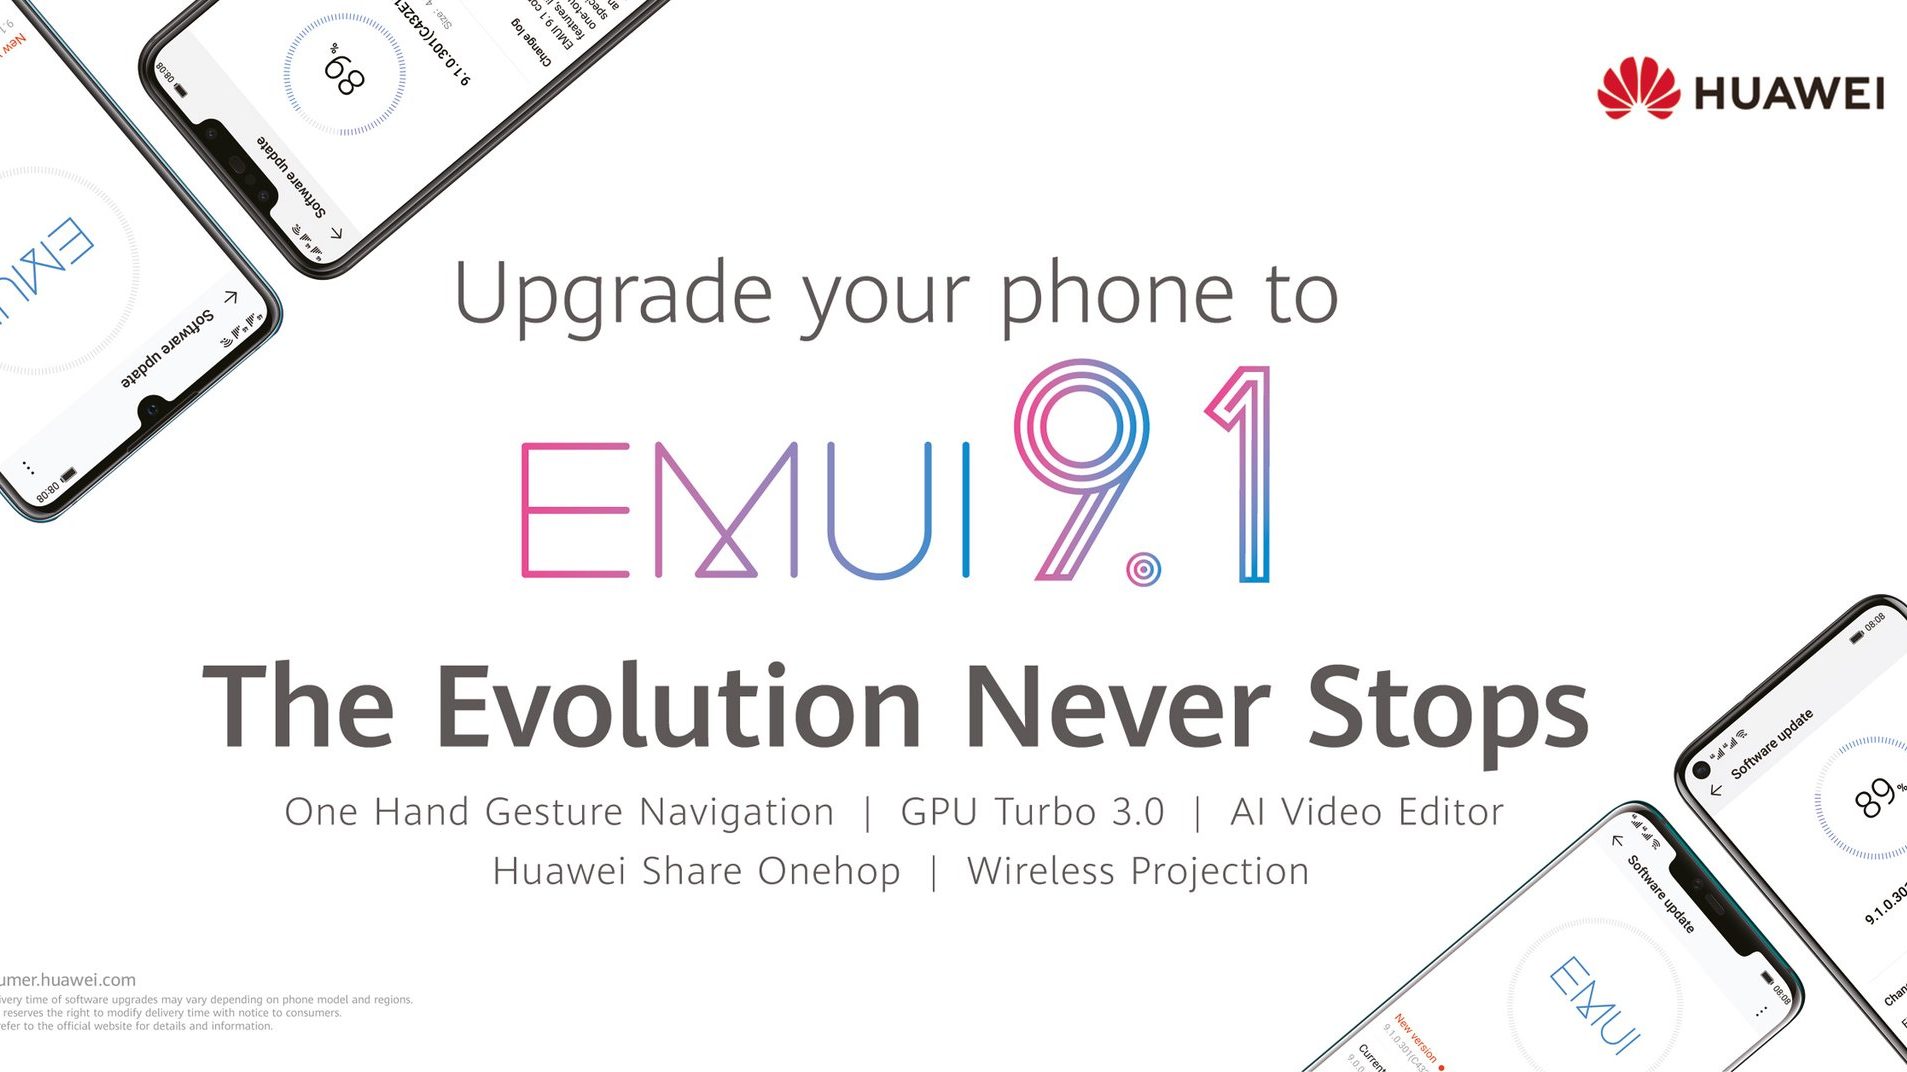 goud etiquette Turbine Huawei Nova 4 getting EMUI 9.1 update with Turbo 3.0